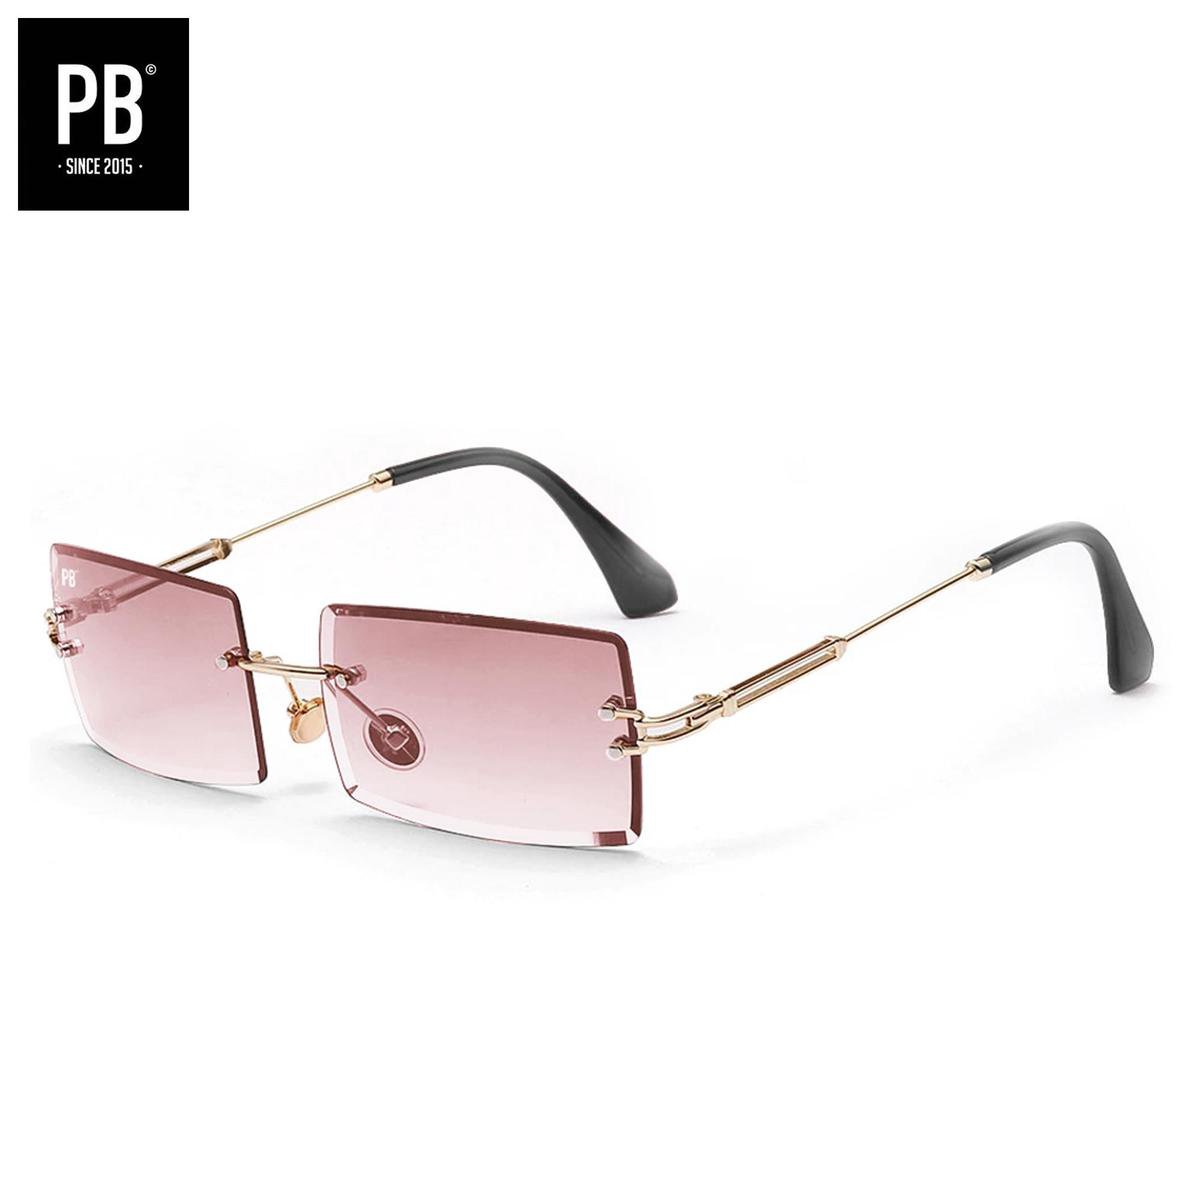 PB Sunglasses - Gipsy Gradient Pink. - Zonnebril dames - Roze lens - Randloze zonnebril - Festival bril